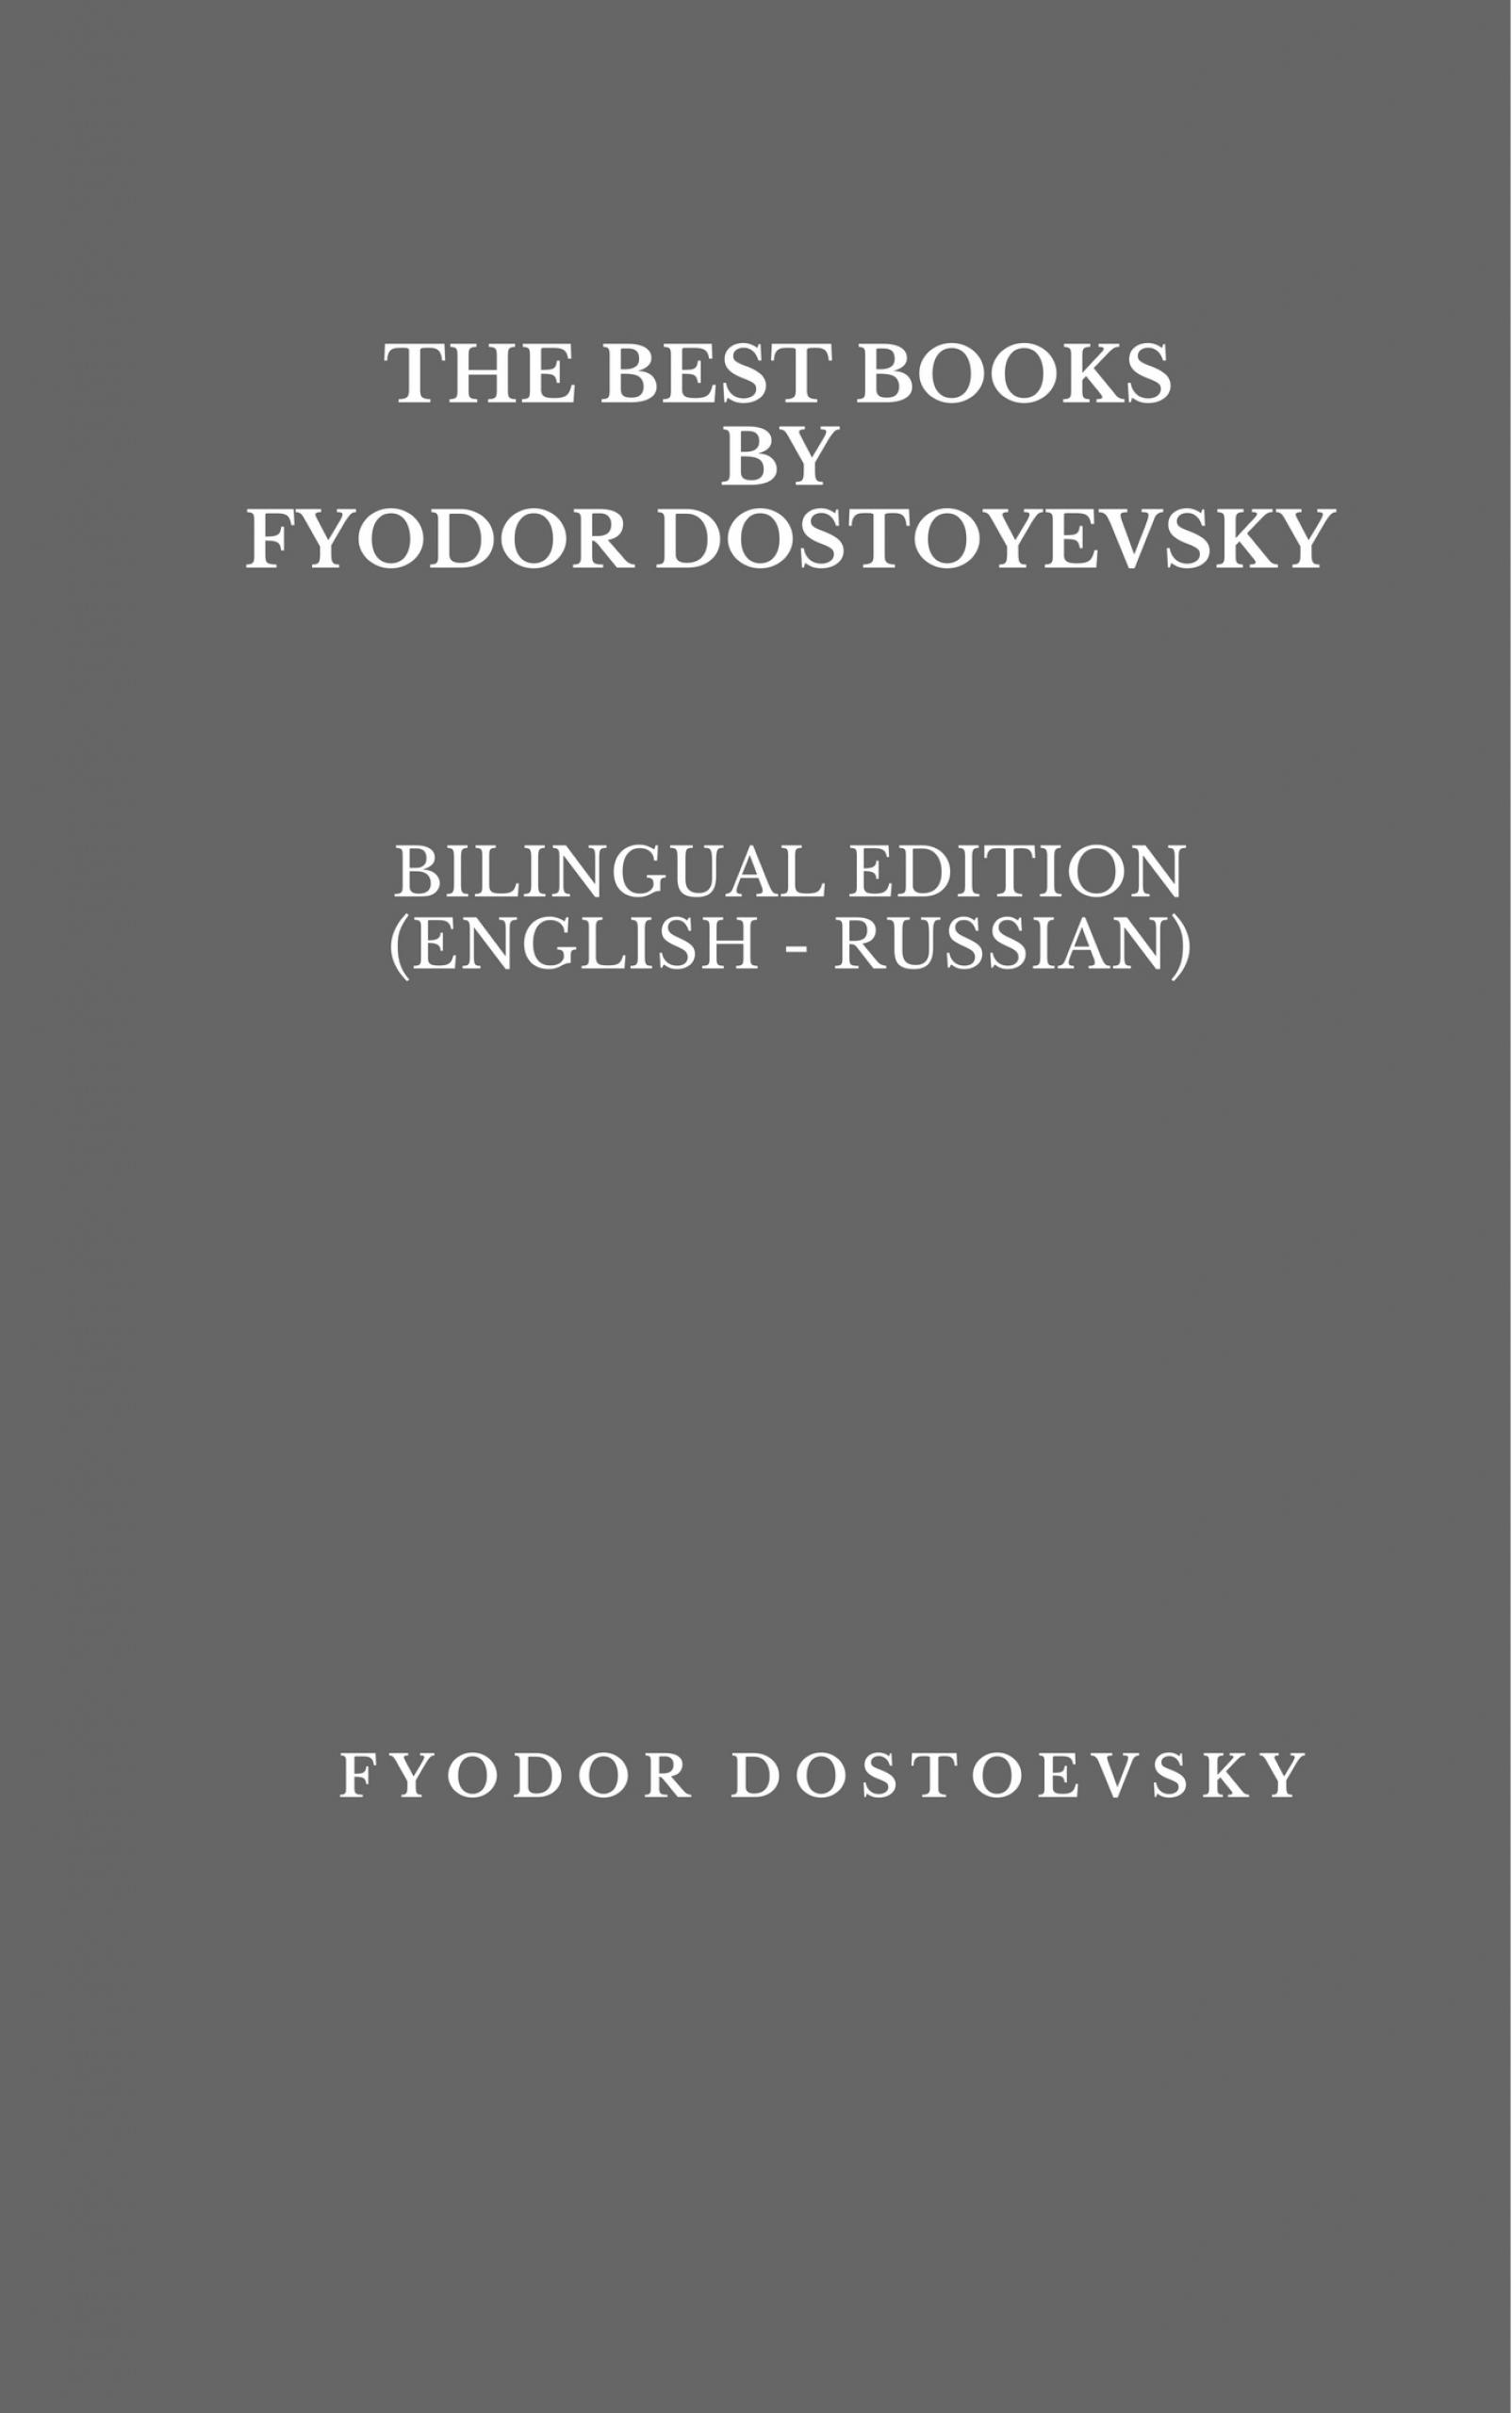 The Best Books by Fyodor Dostoyevsky - Dostoevsky Fyodor